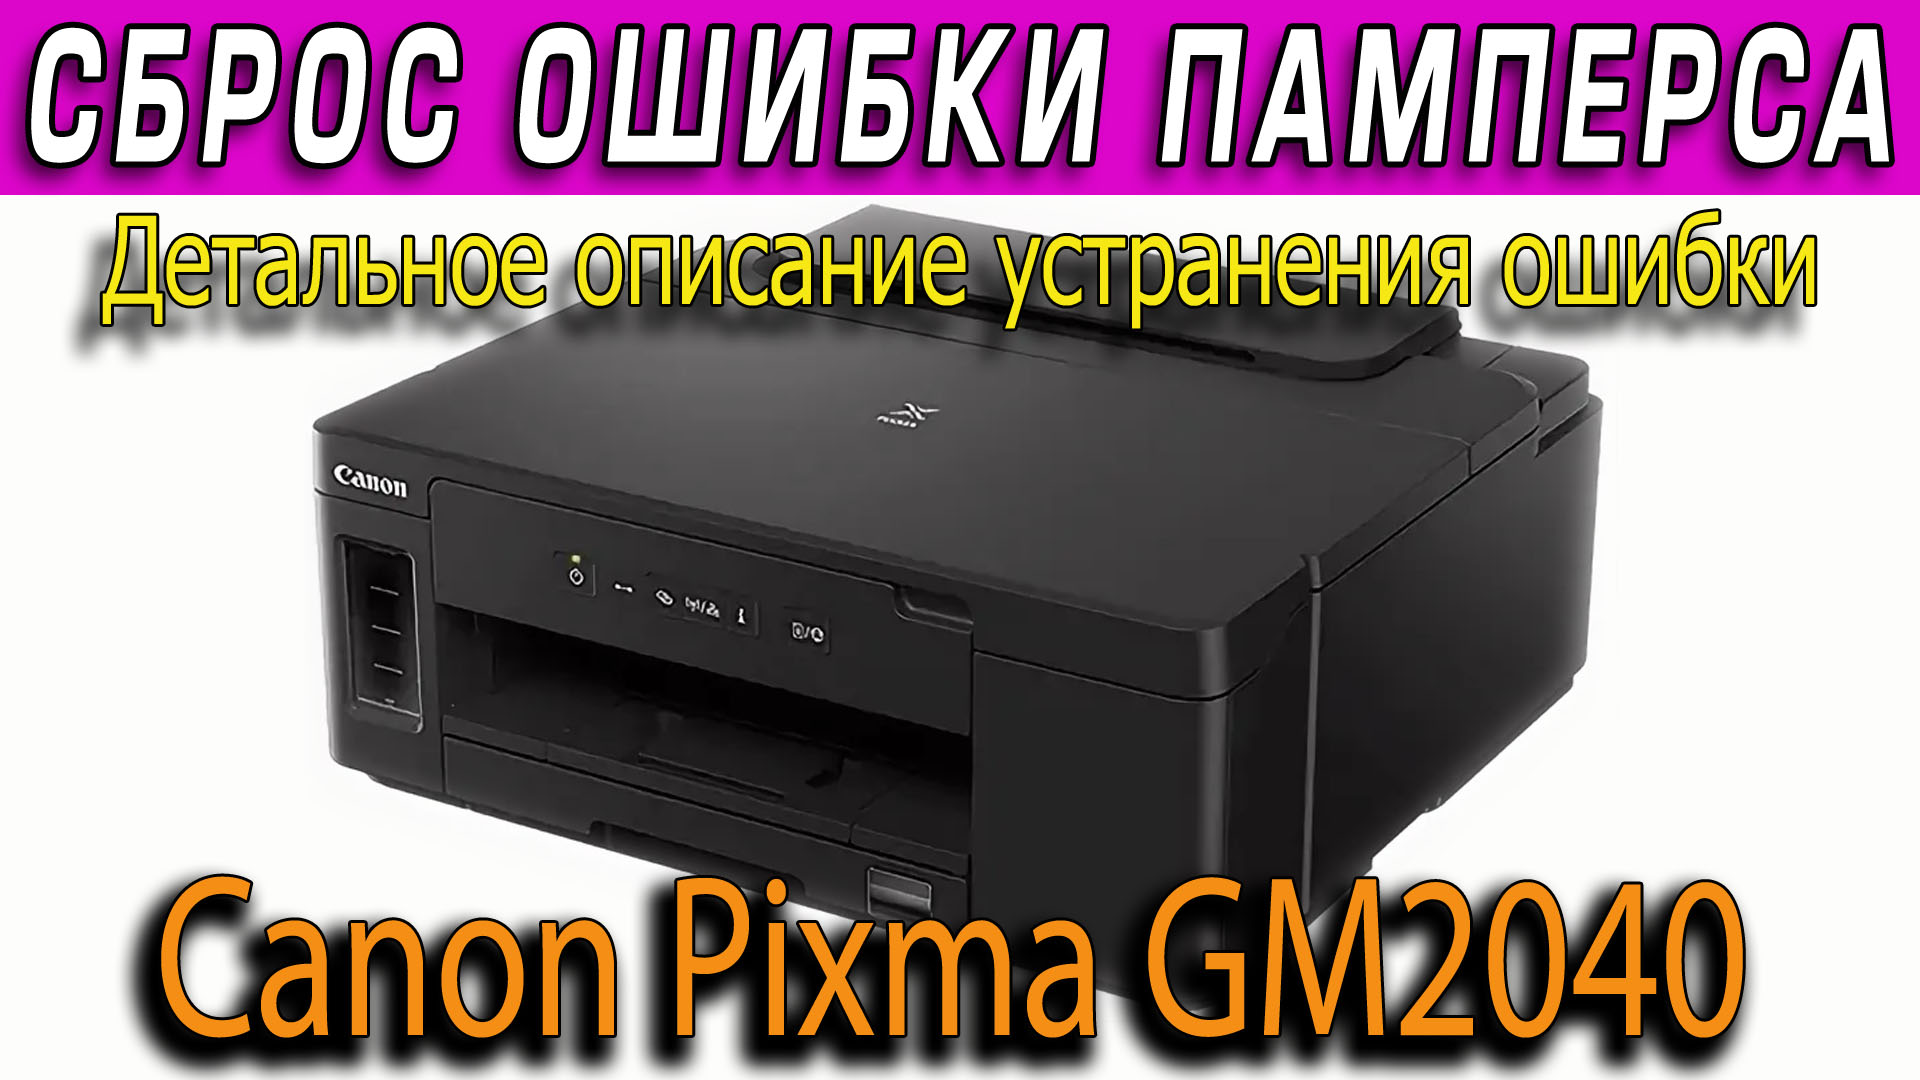 Canon Pixma GM2040 сброс ошибки памперса 5B00